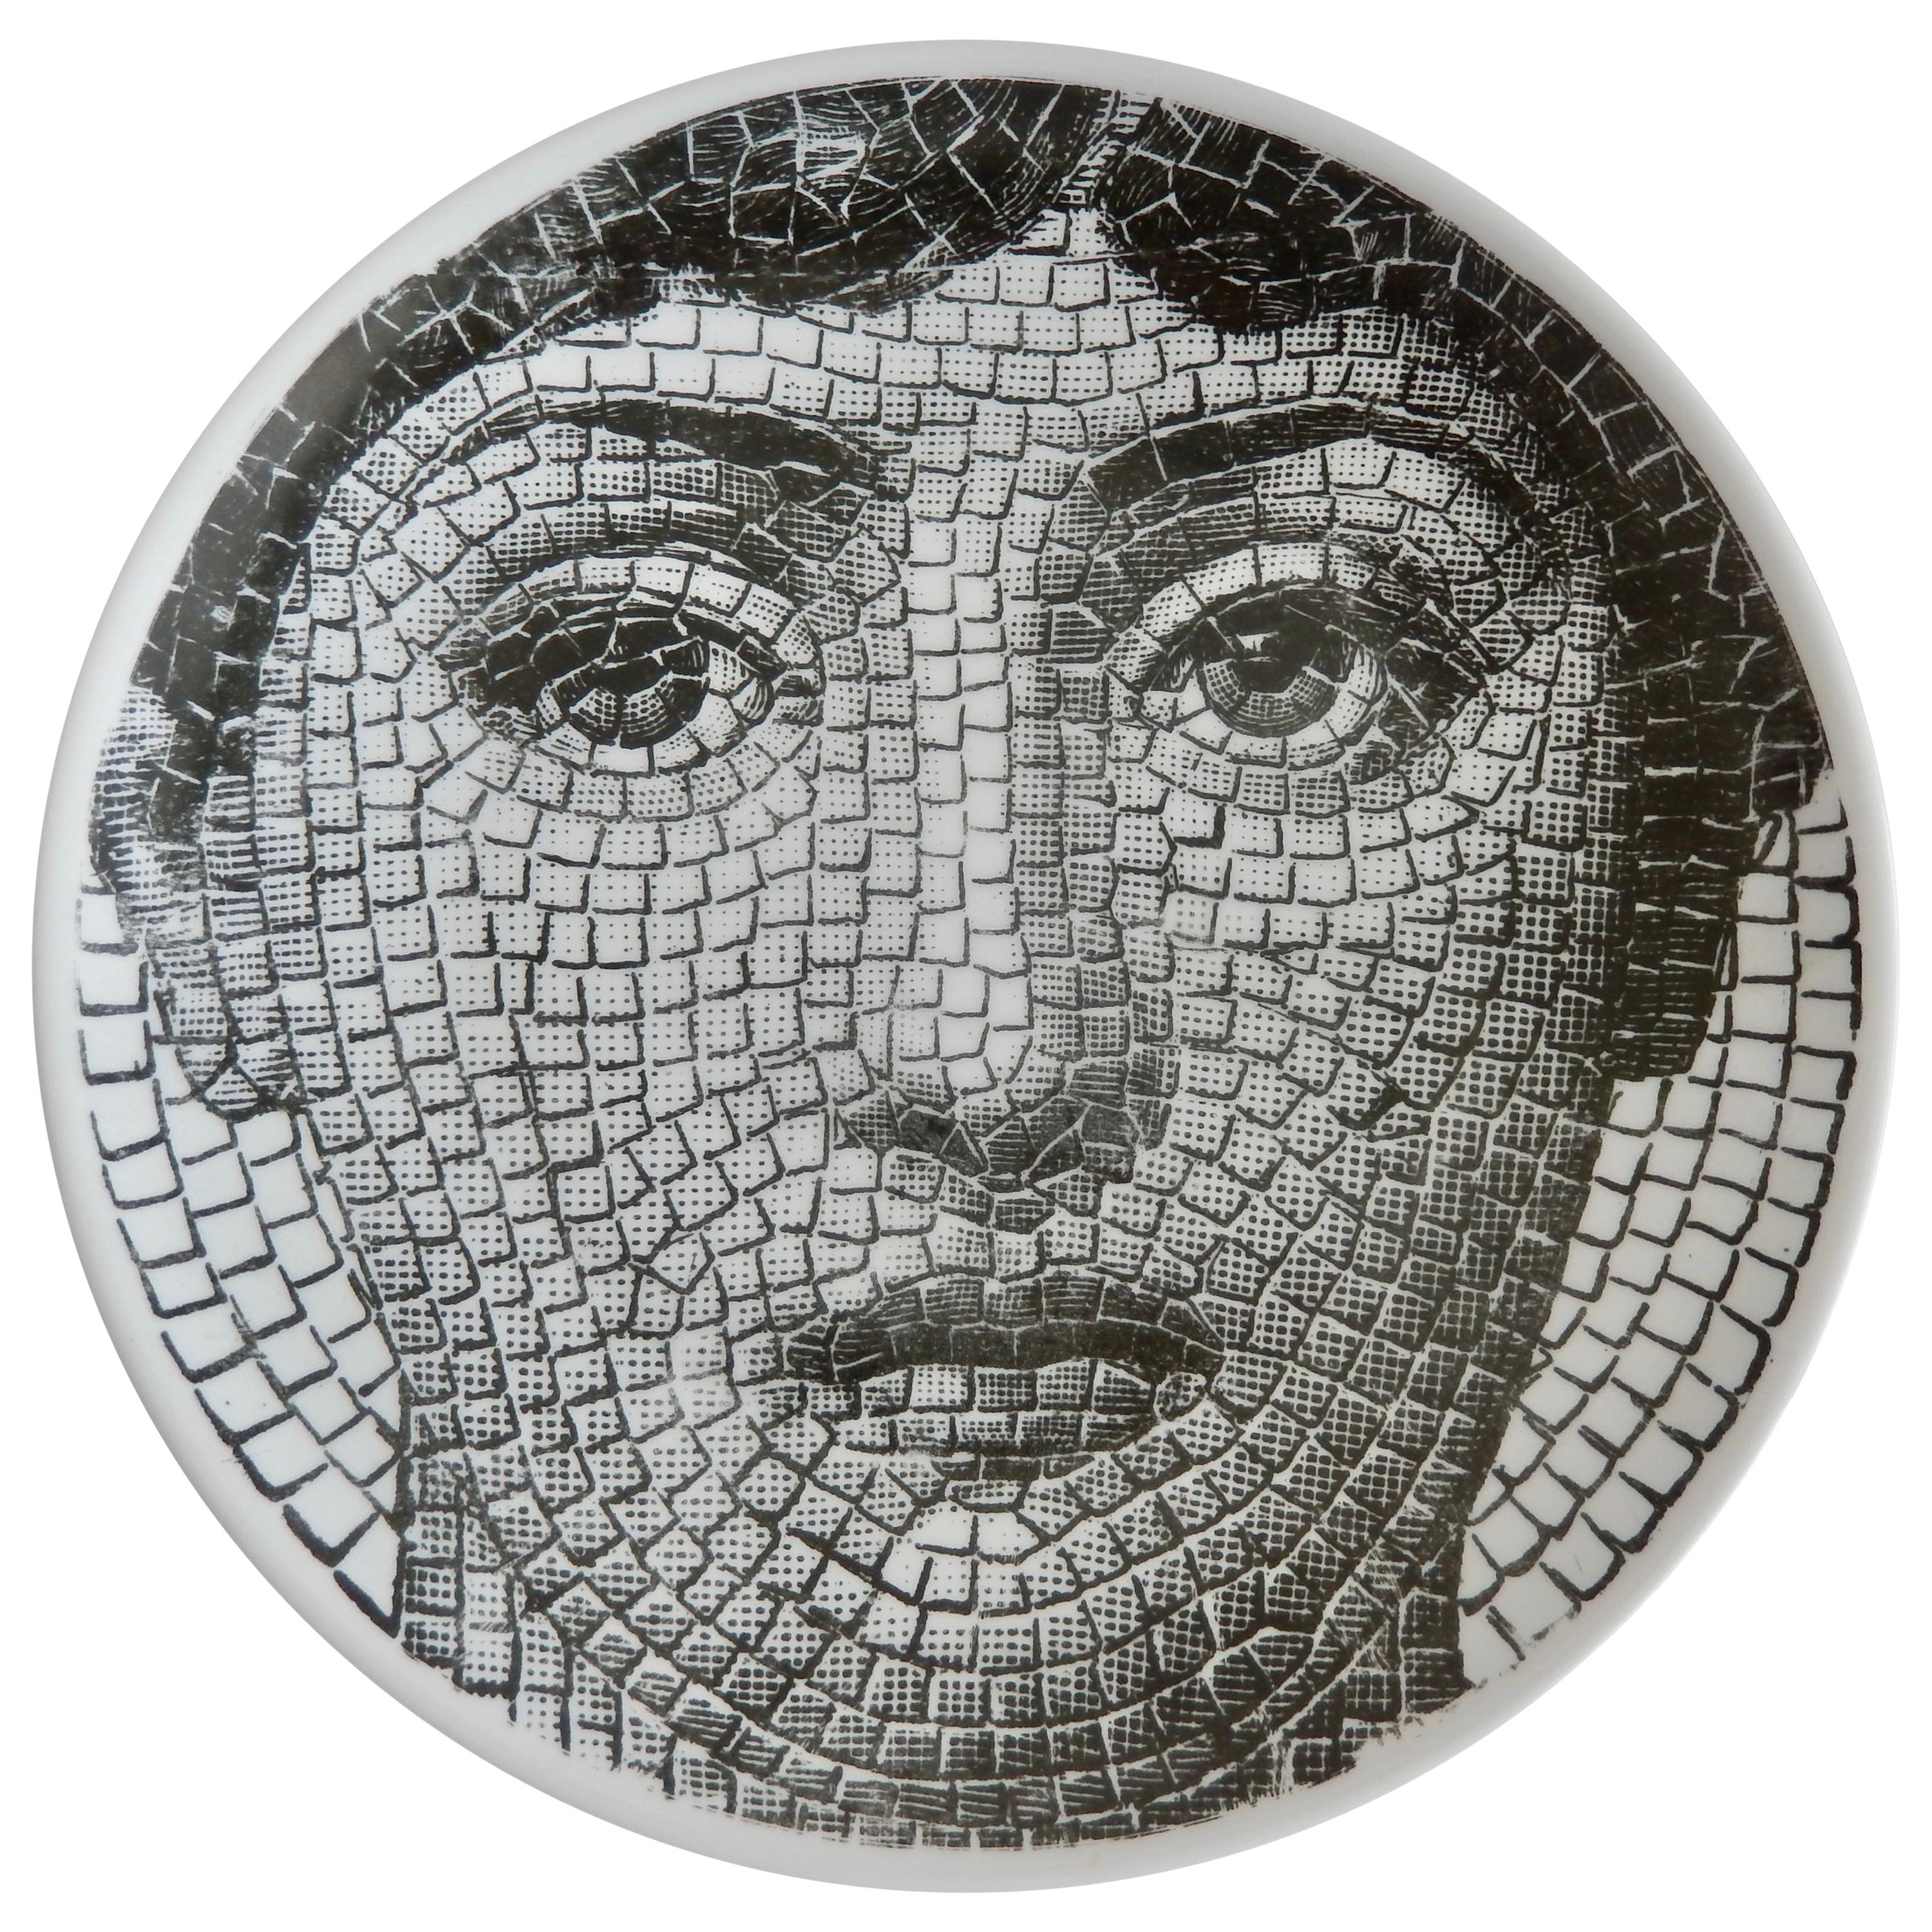 1950s Fornasetti Roman Mosaic Face Plate, Tema e Variazioni N131 For Sale